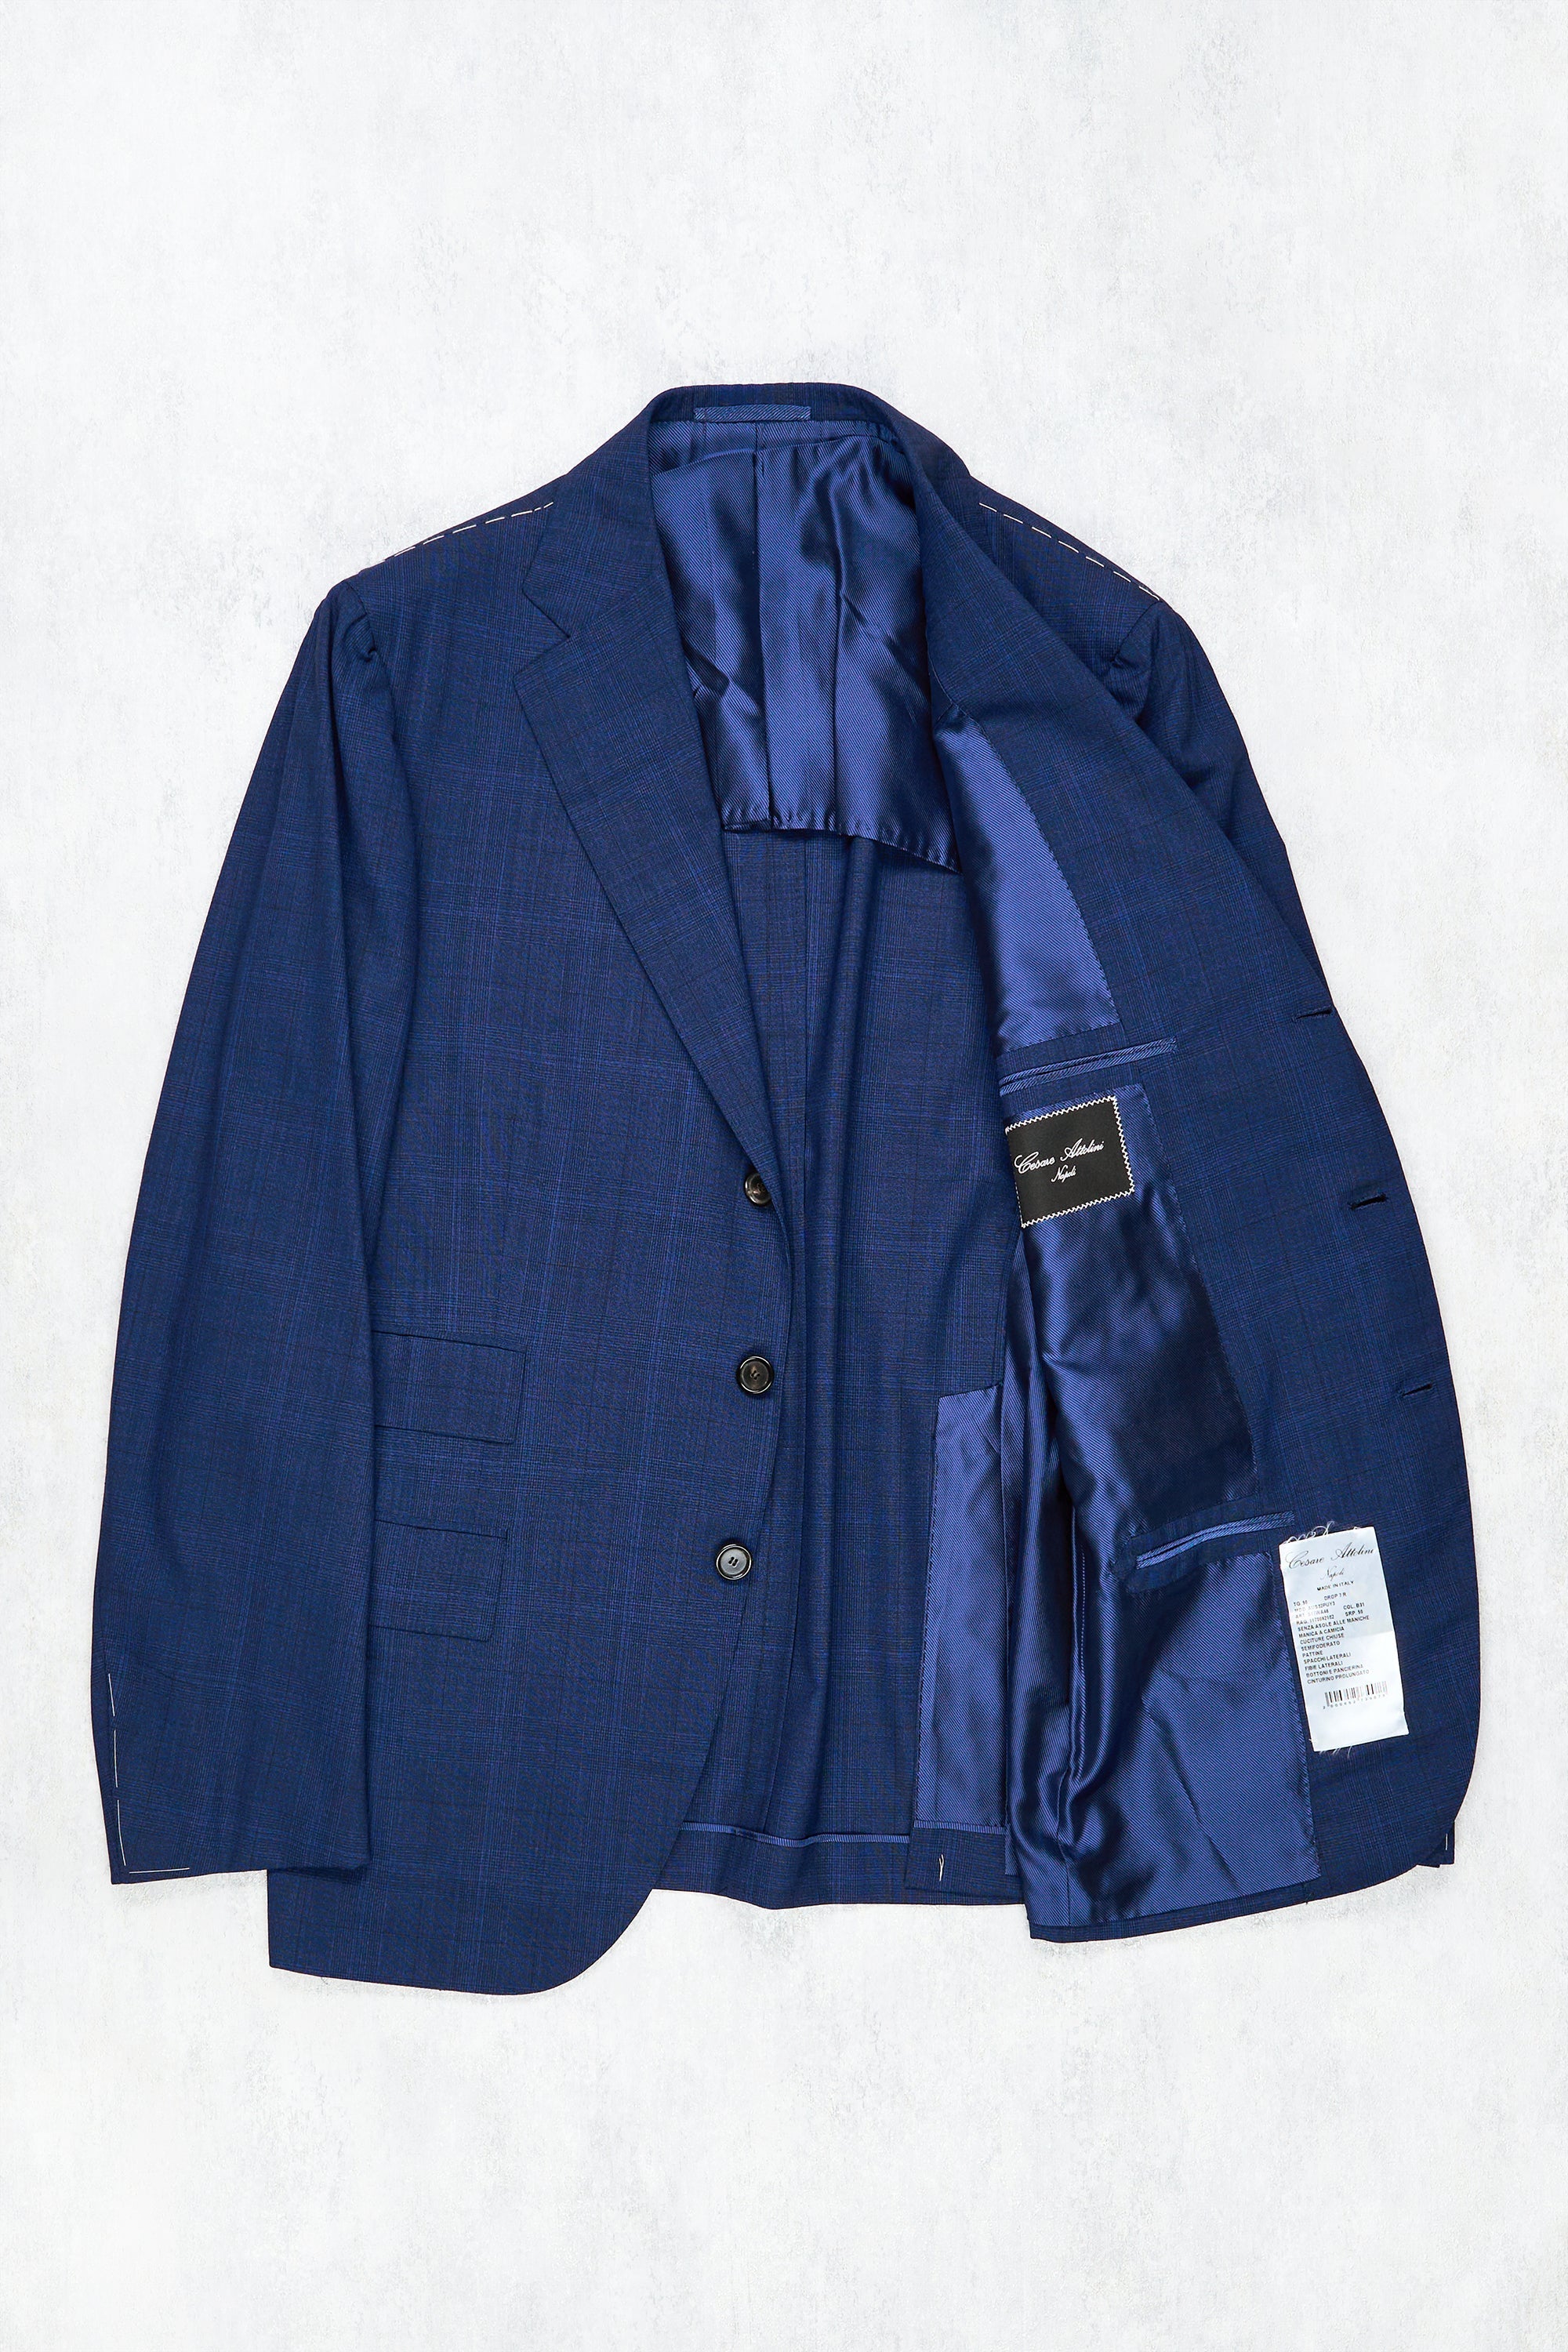 Cesare Attolini Blue/Black Check Wool Suit